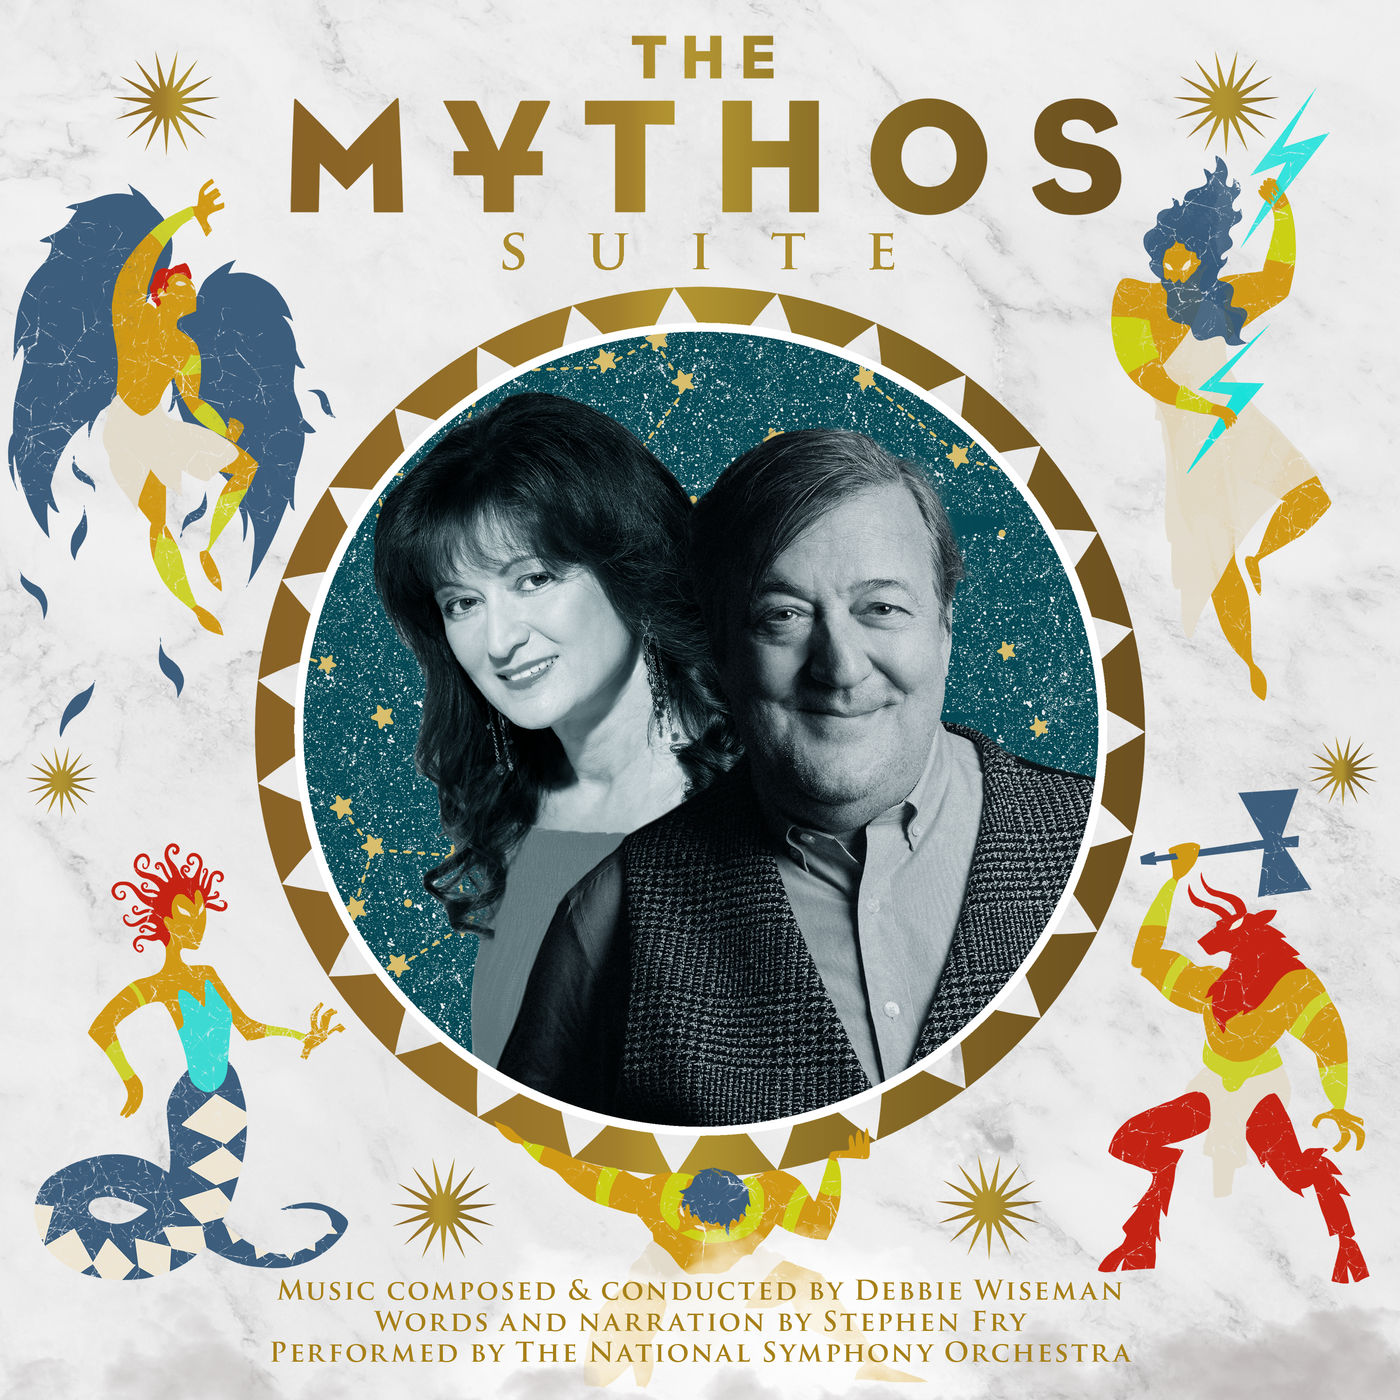 Stephen Fry, Debbie Wiseman, The National Symphony Orchestra - The Mythos Suite (2020) [FLAC 24bit/48kHz]